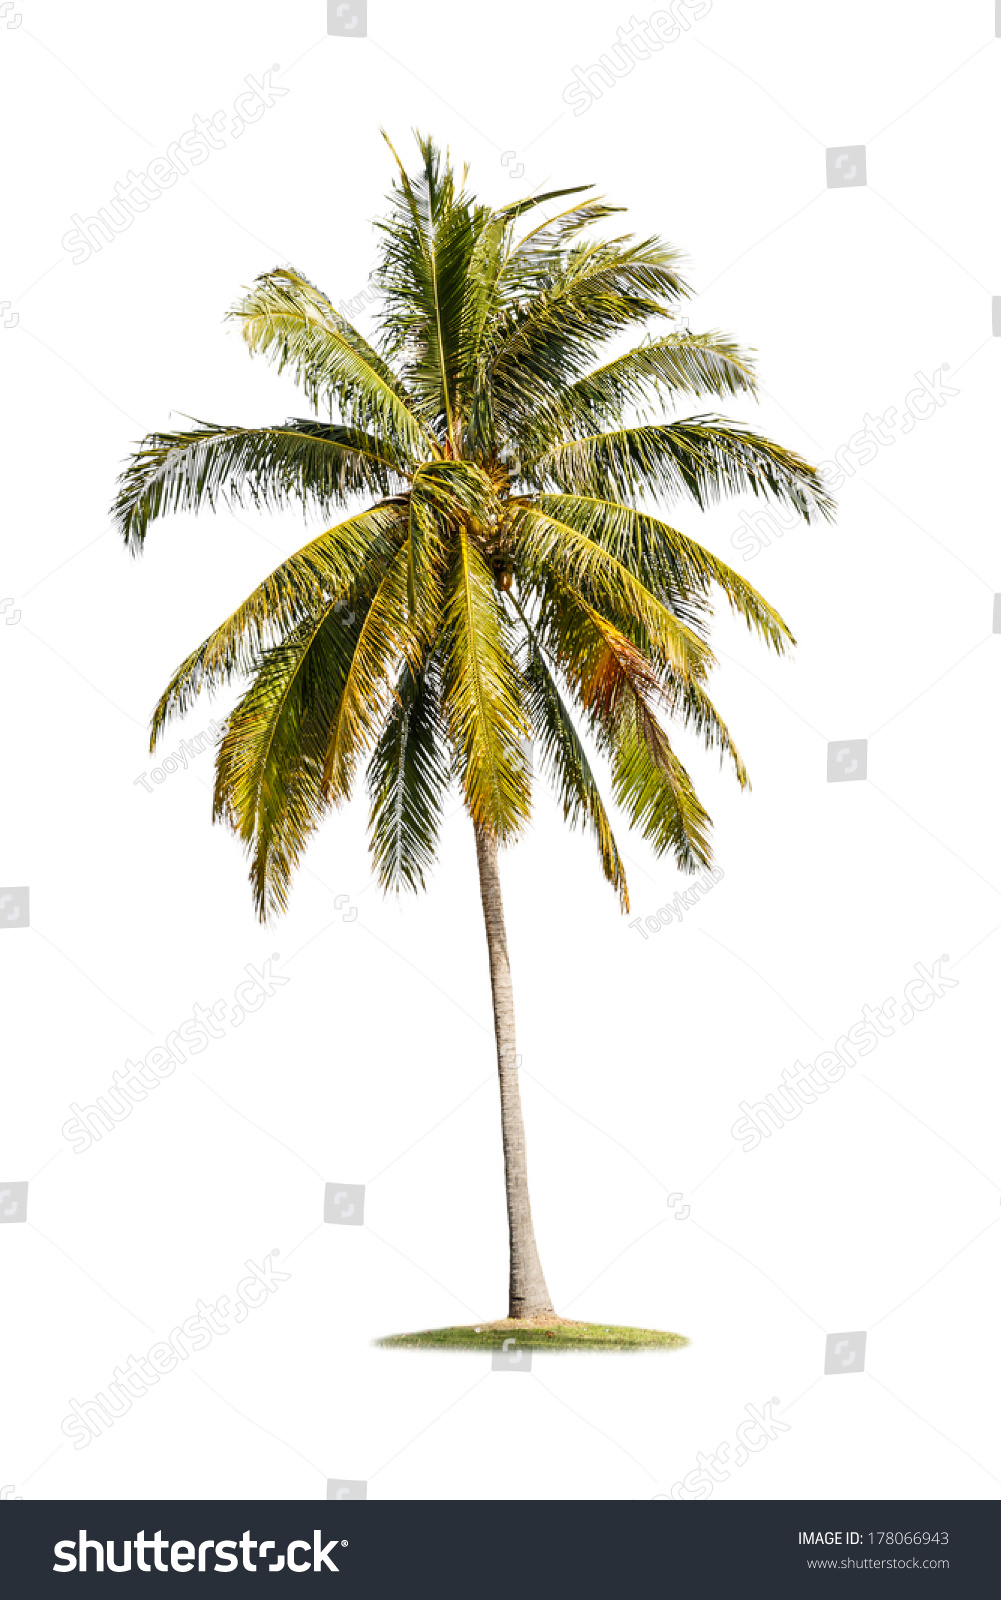 Single Coconut Tree Isolated On White Background Stock Photo 178066943